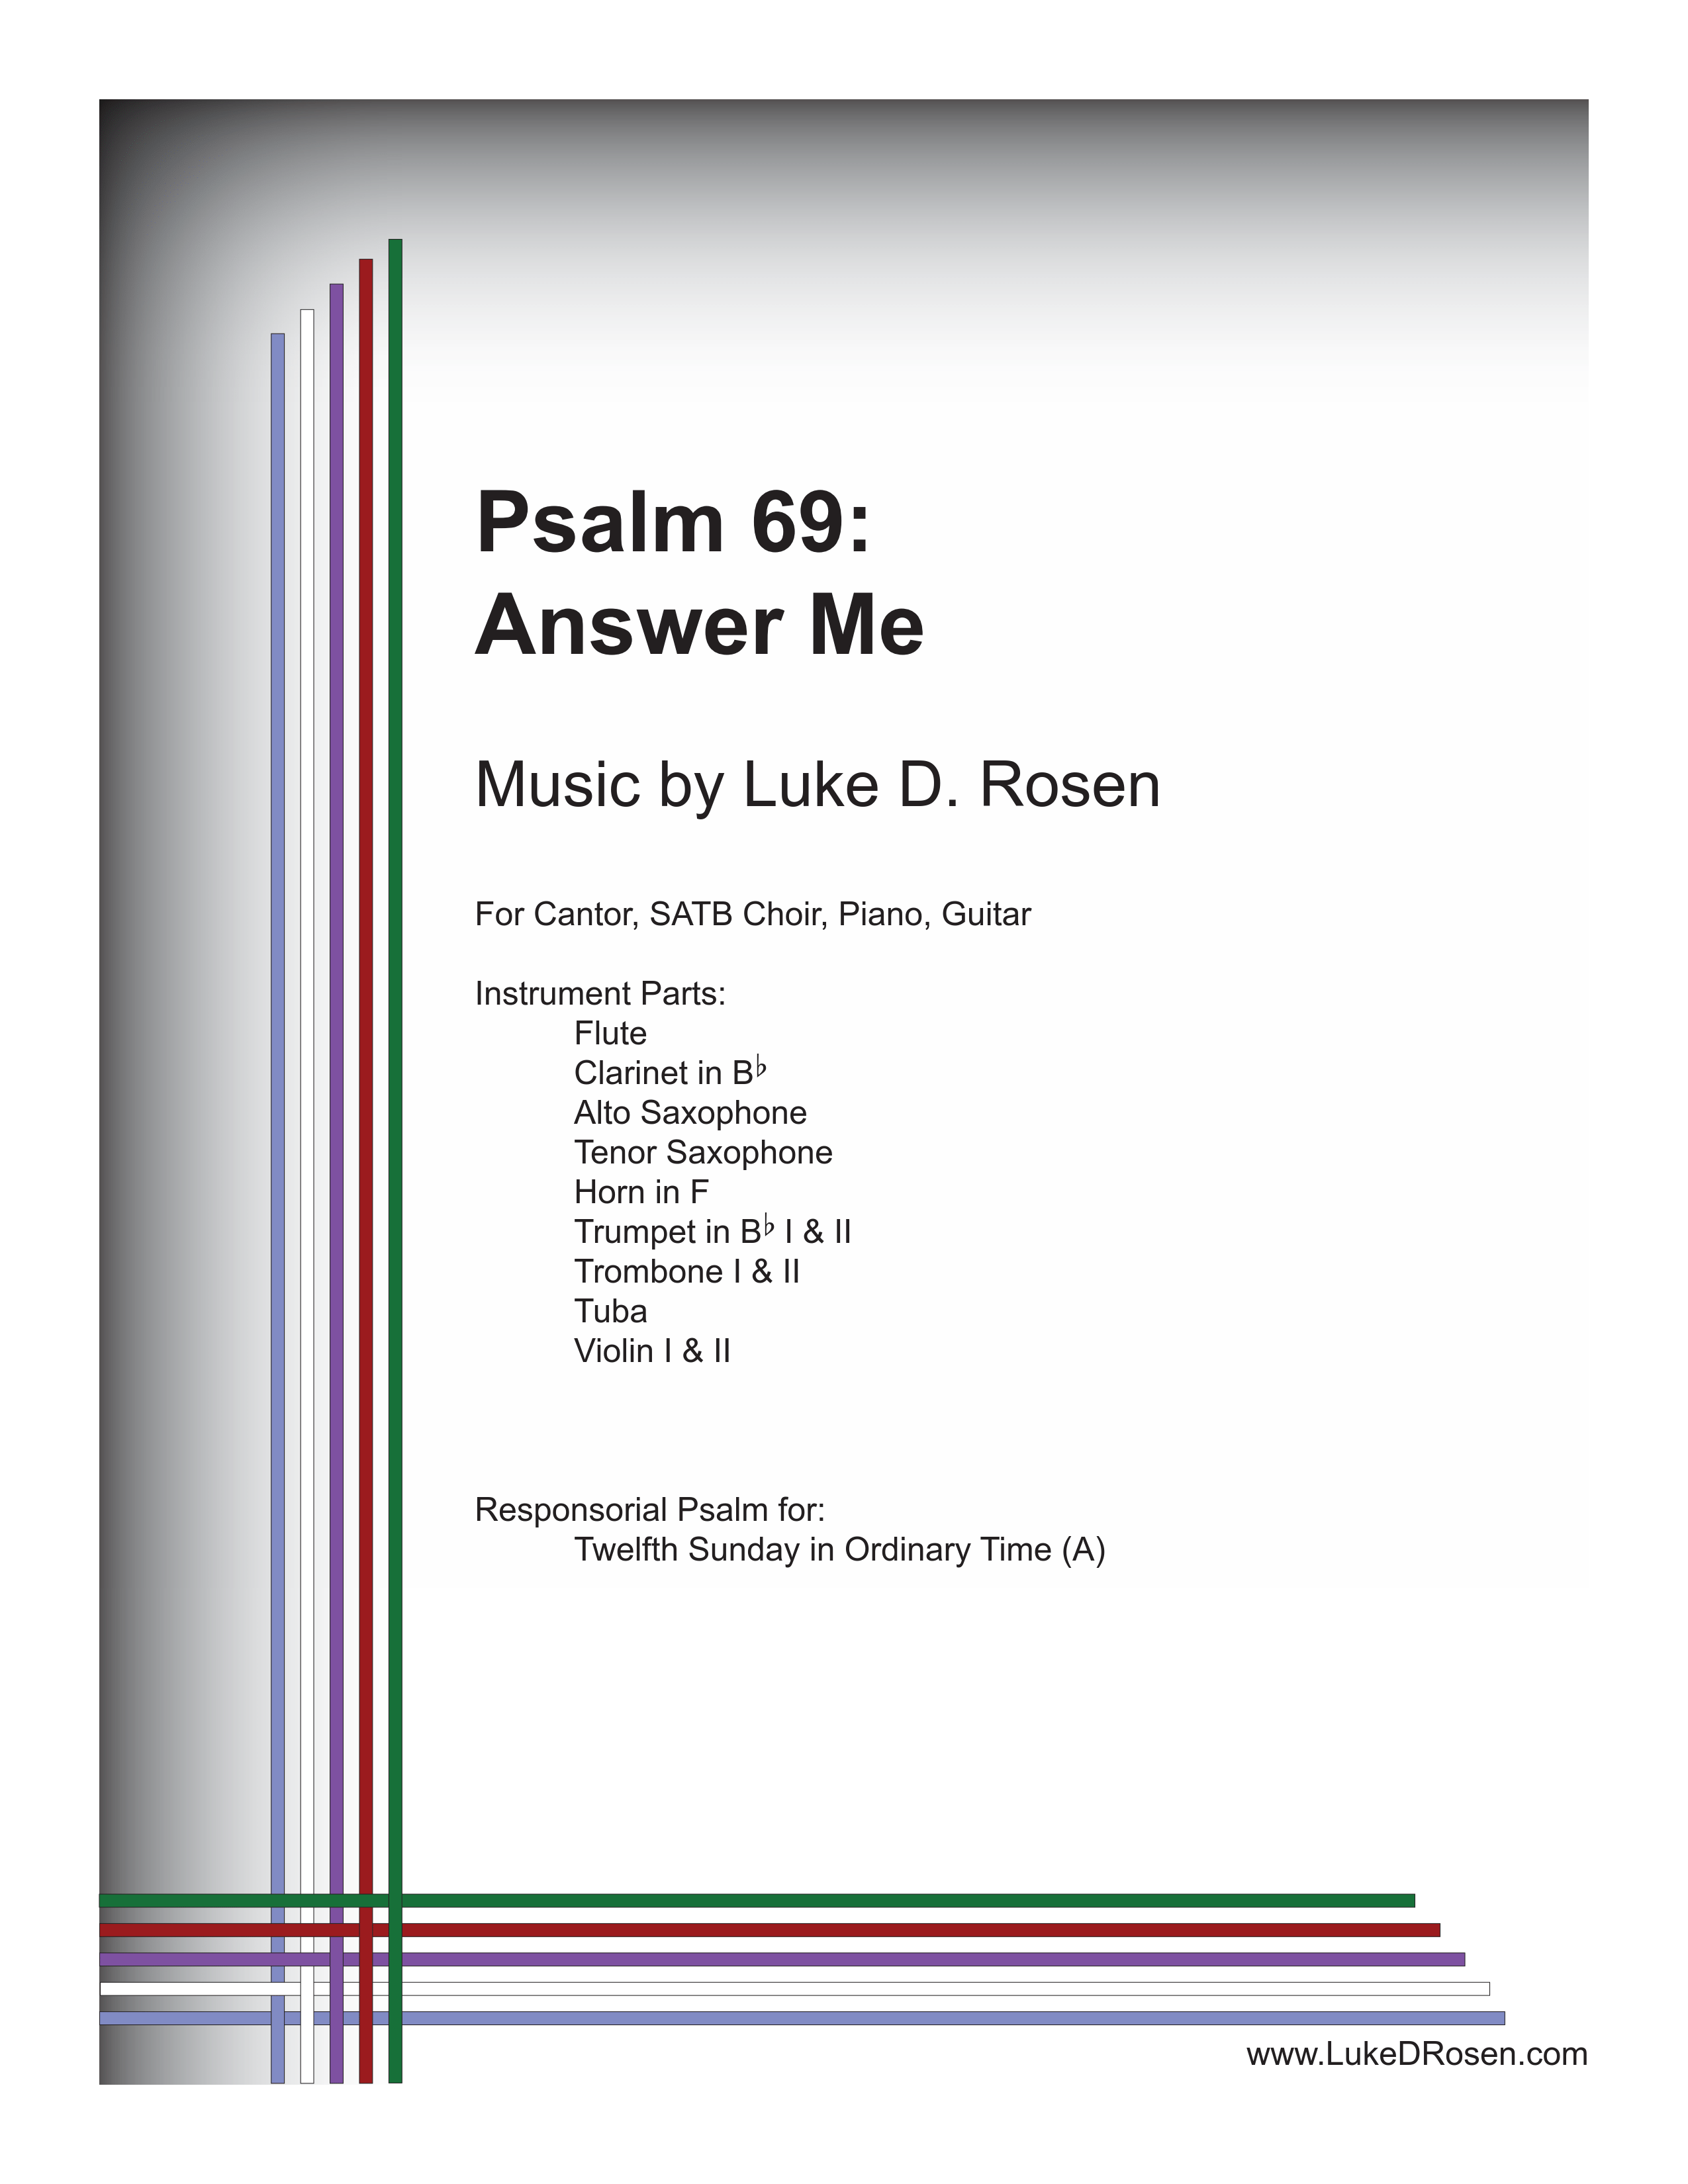 Psalm 69 – Answer Me (Rosen)